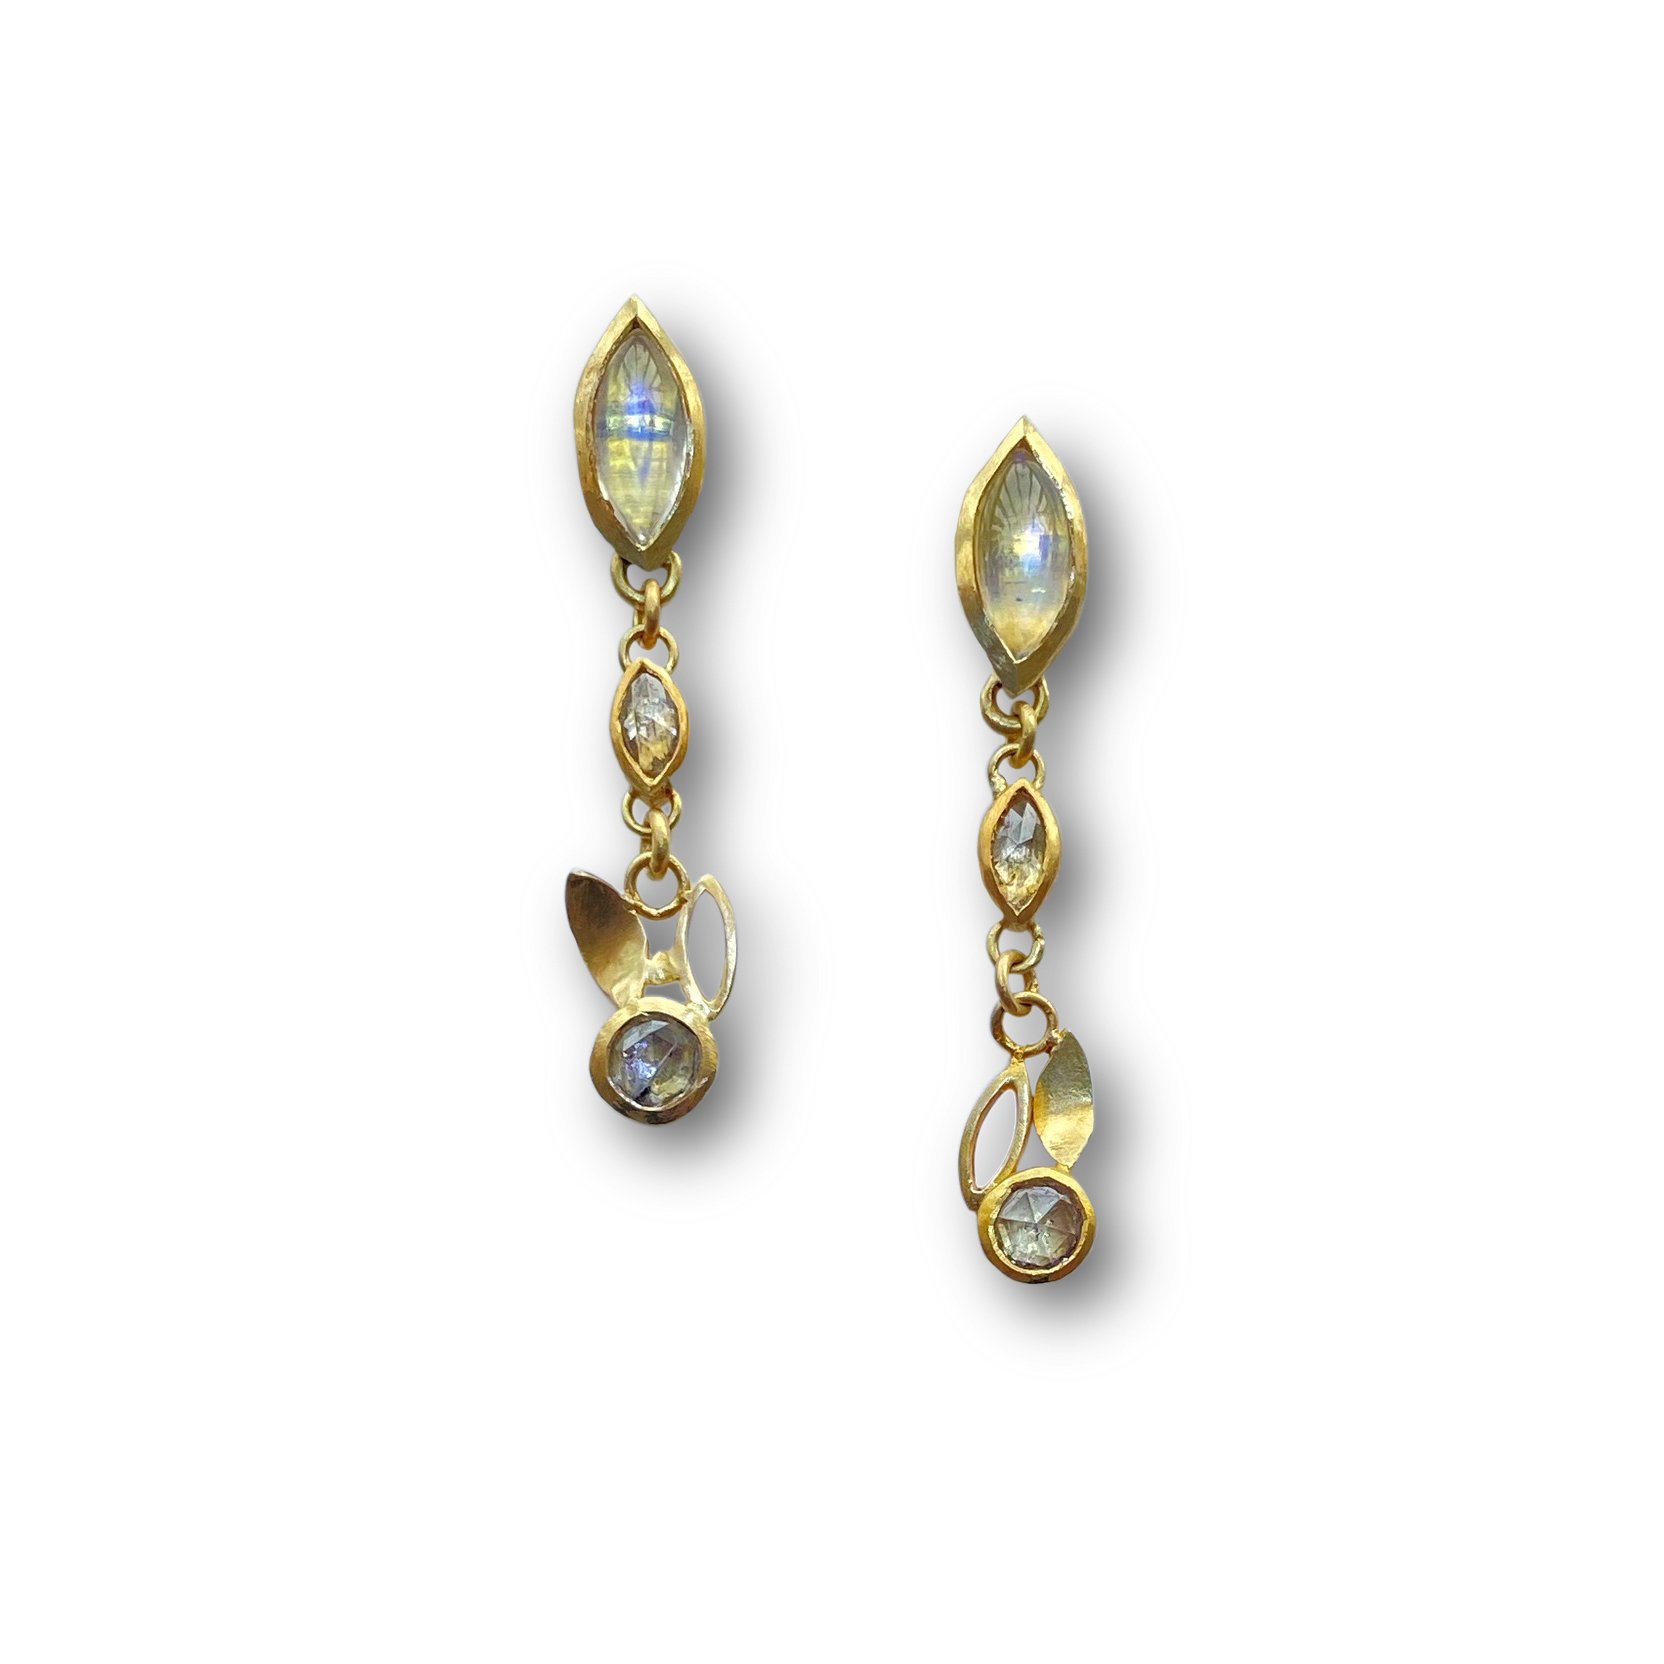 Folium gold and moonstone earrings